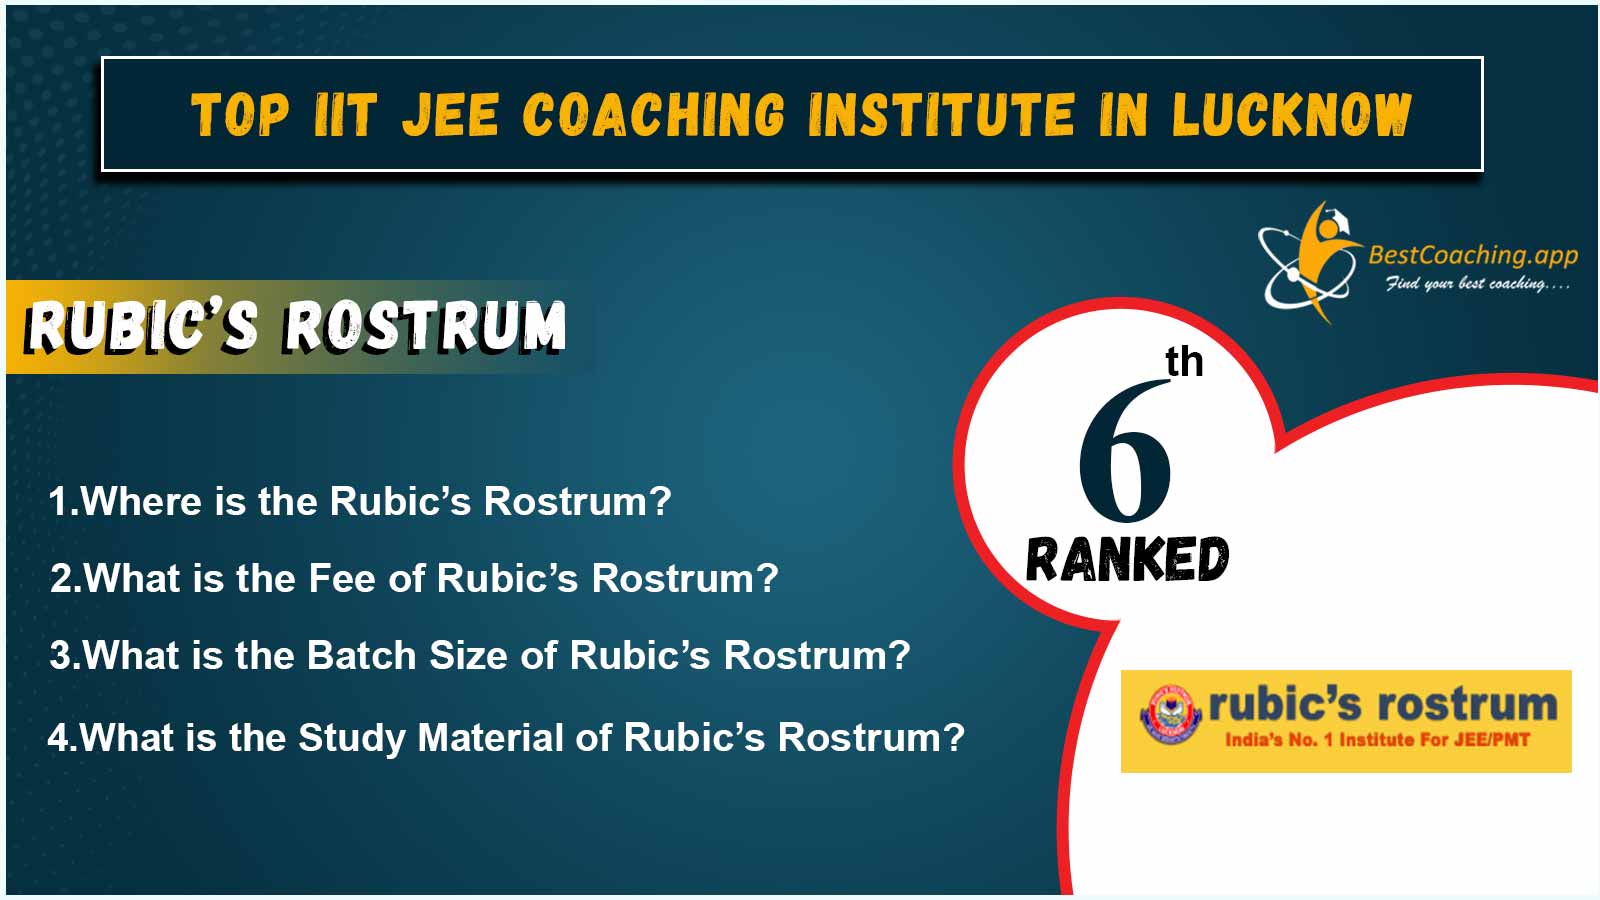 Top IIT JEE Coaching Institute in Lucknow